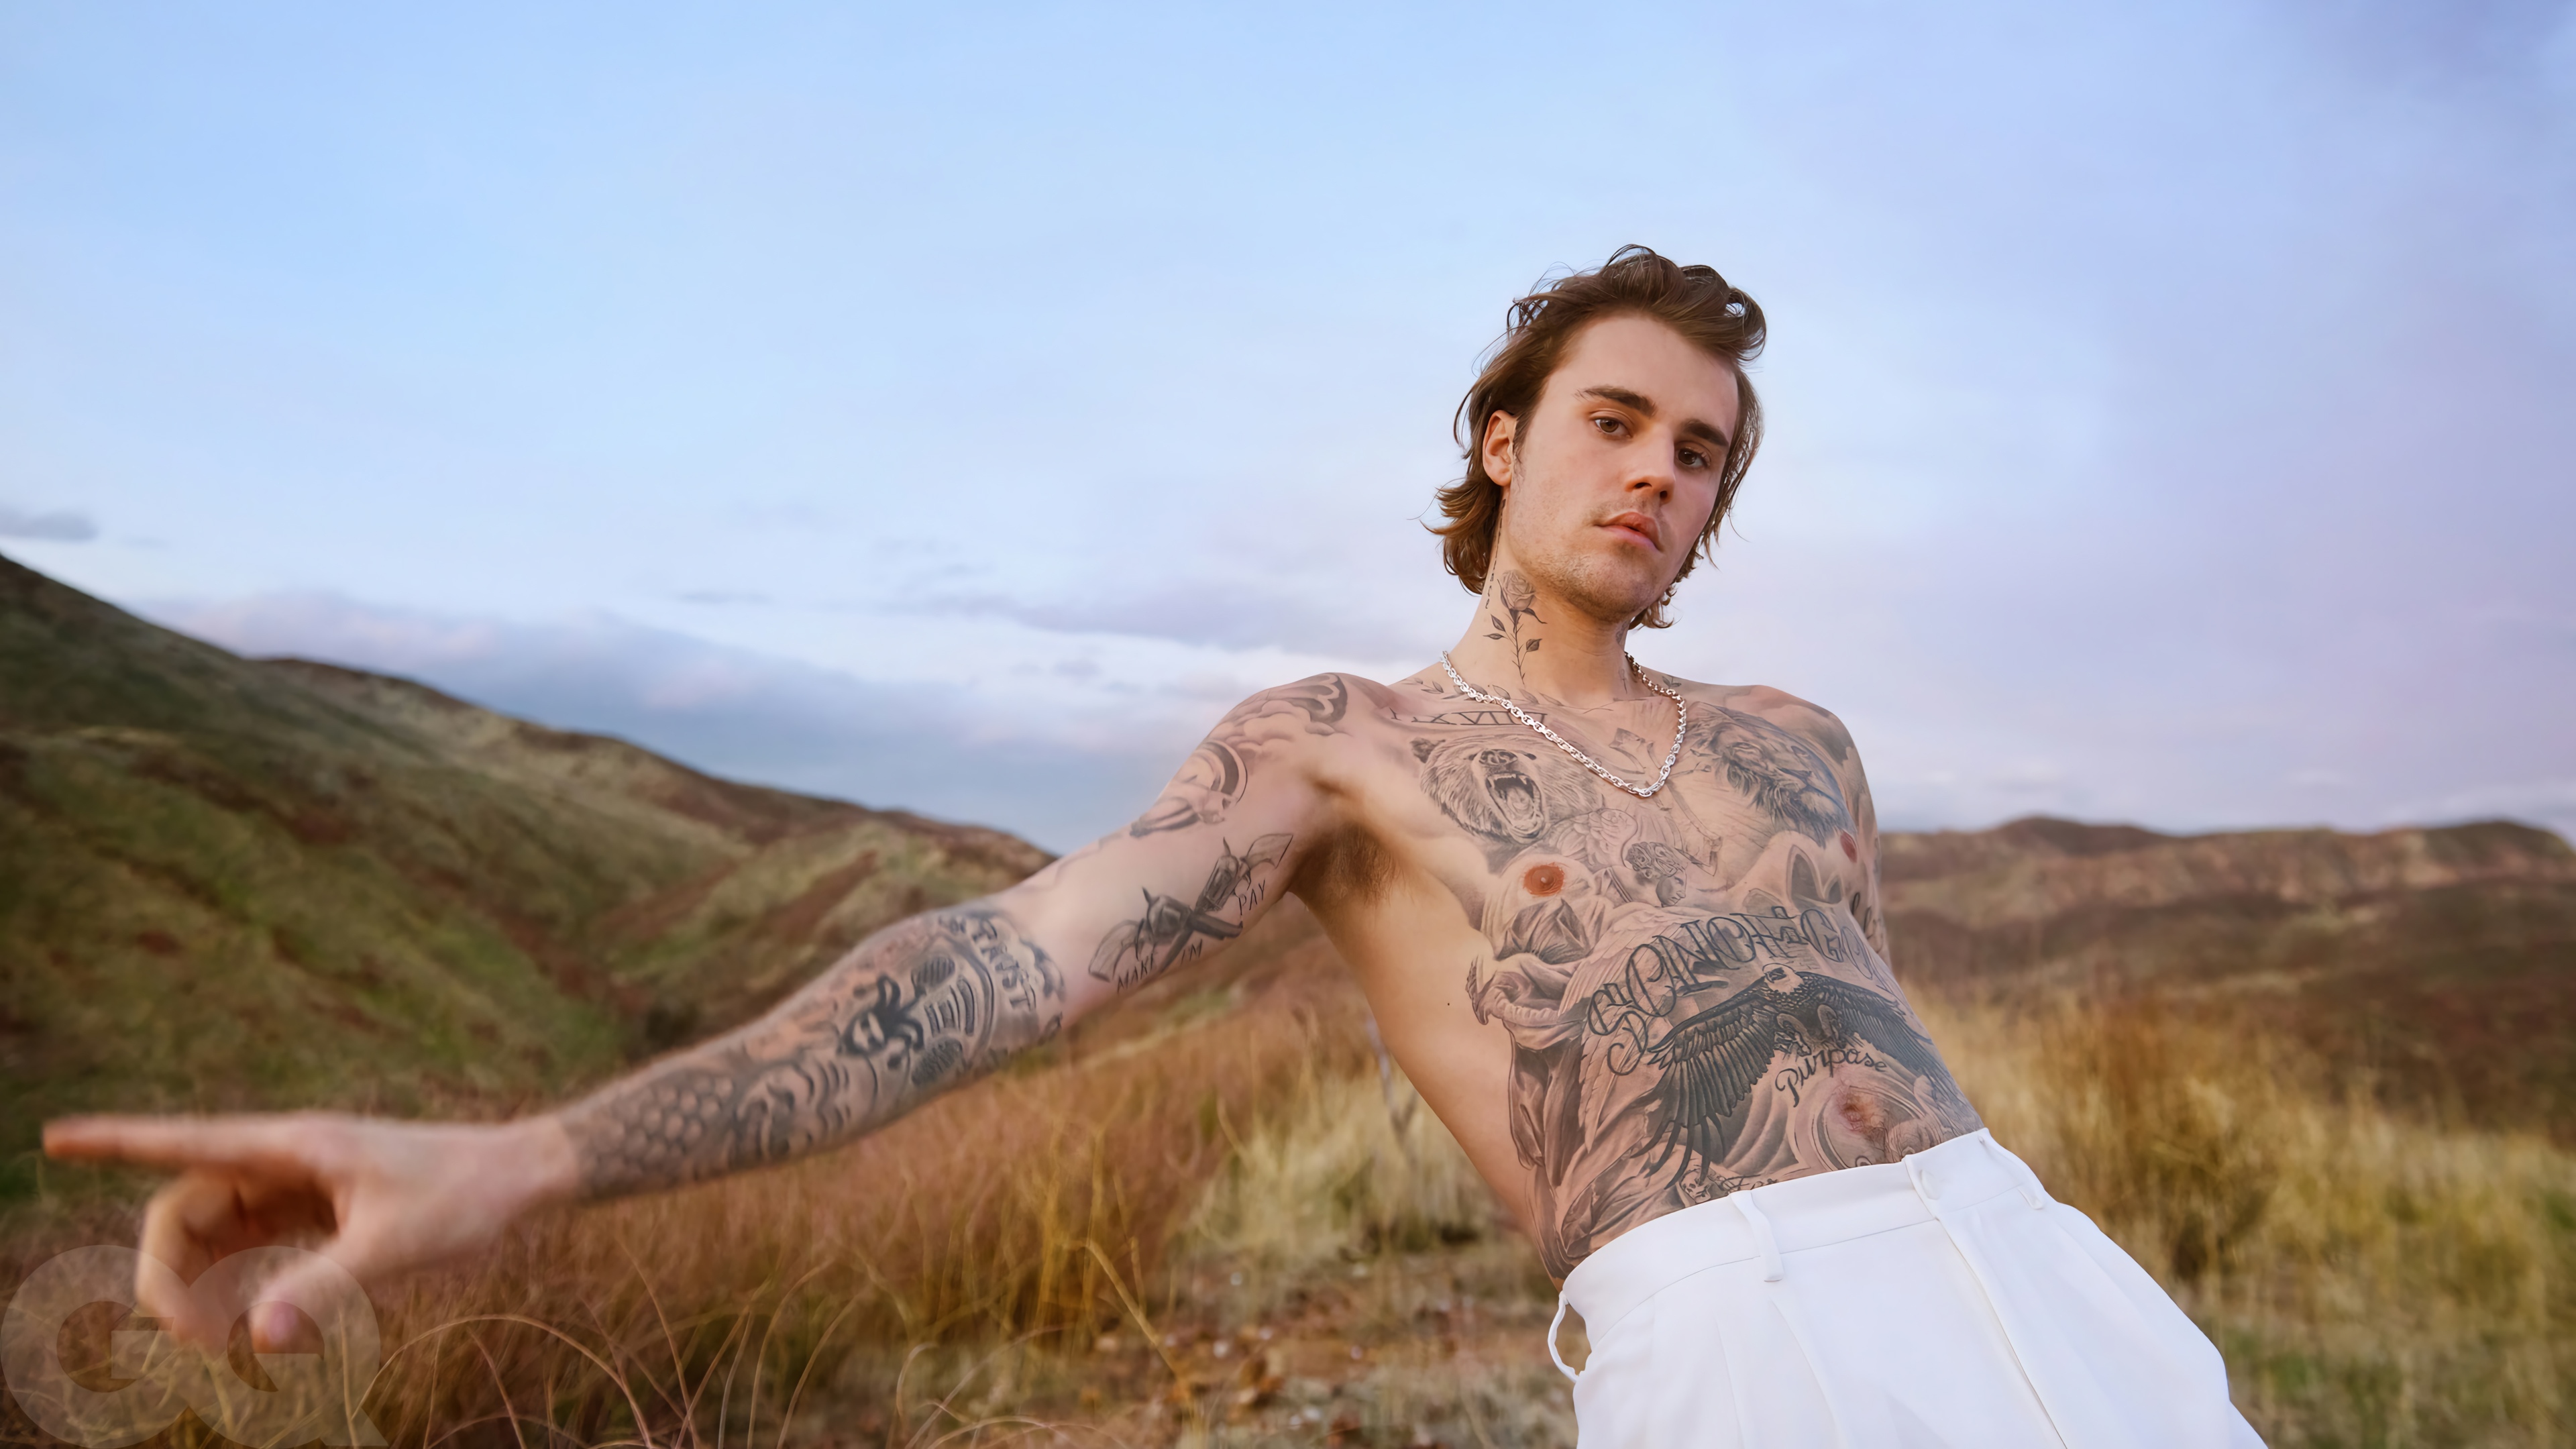 Fondos de pantalla Justin Bieber con tatuajes sin camisa